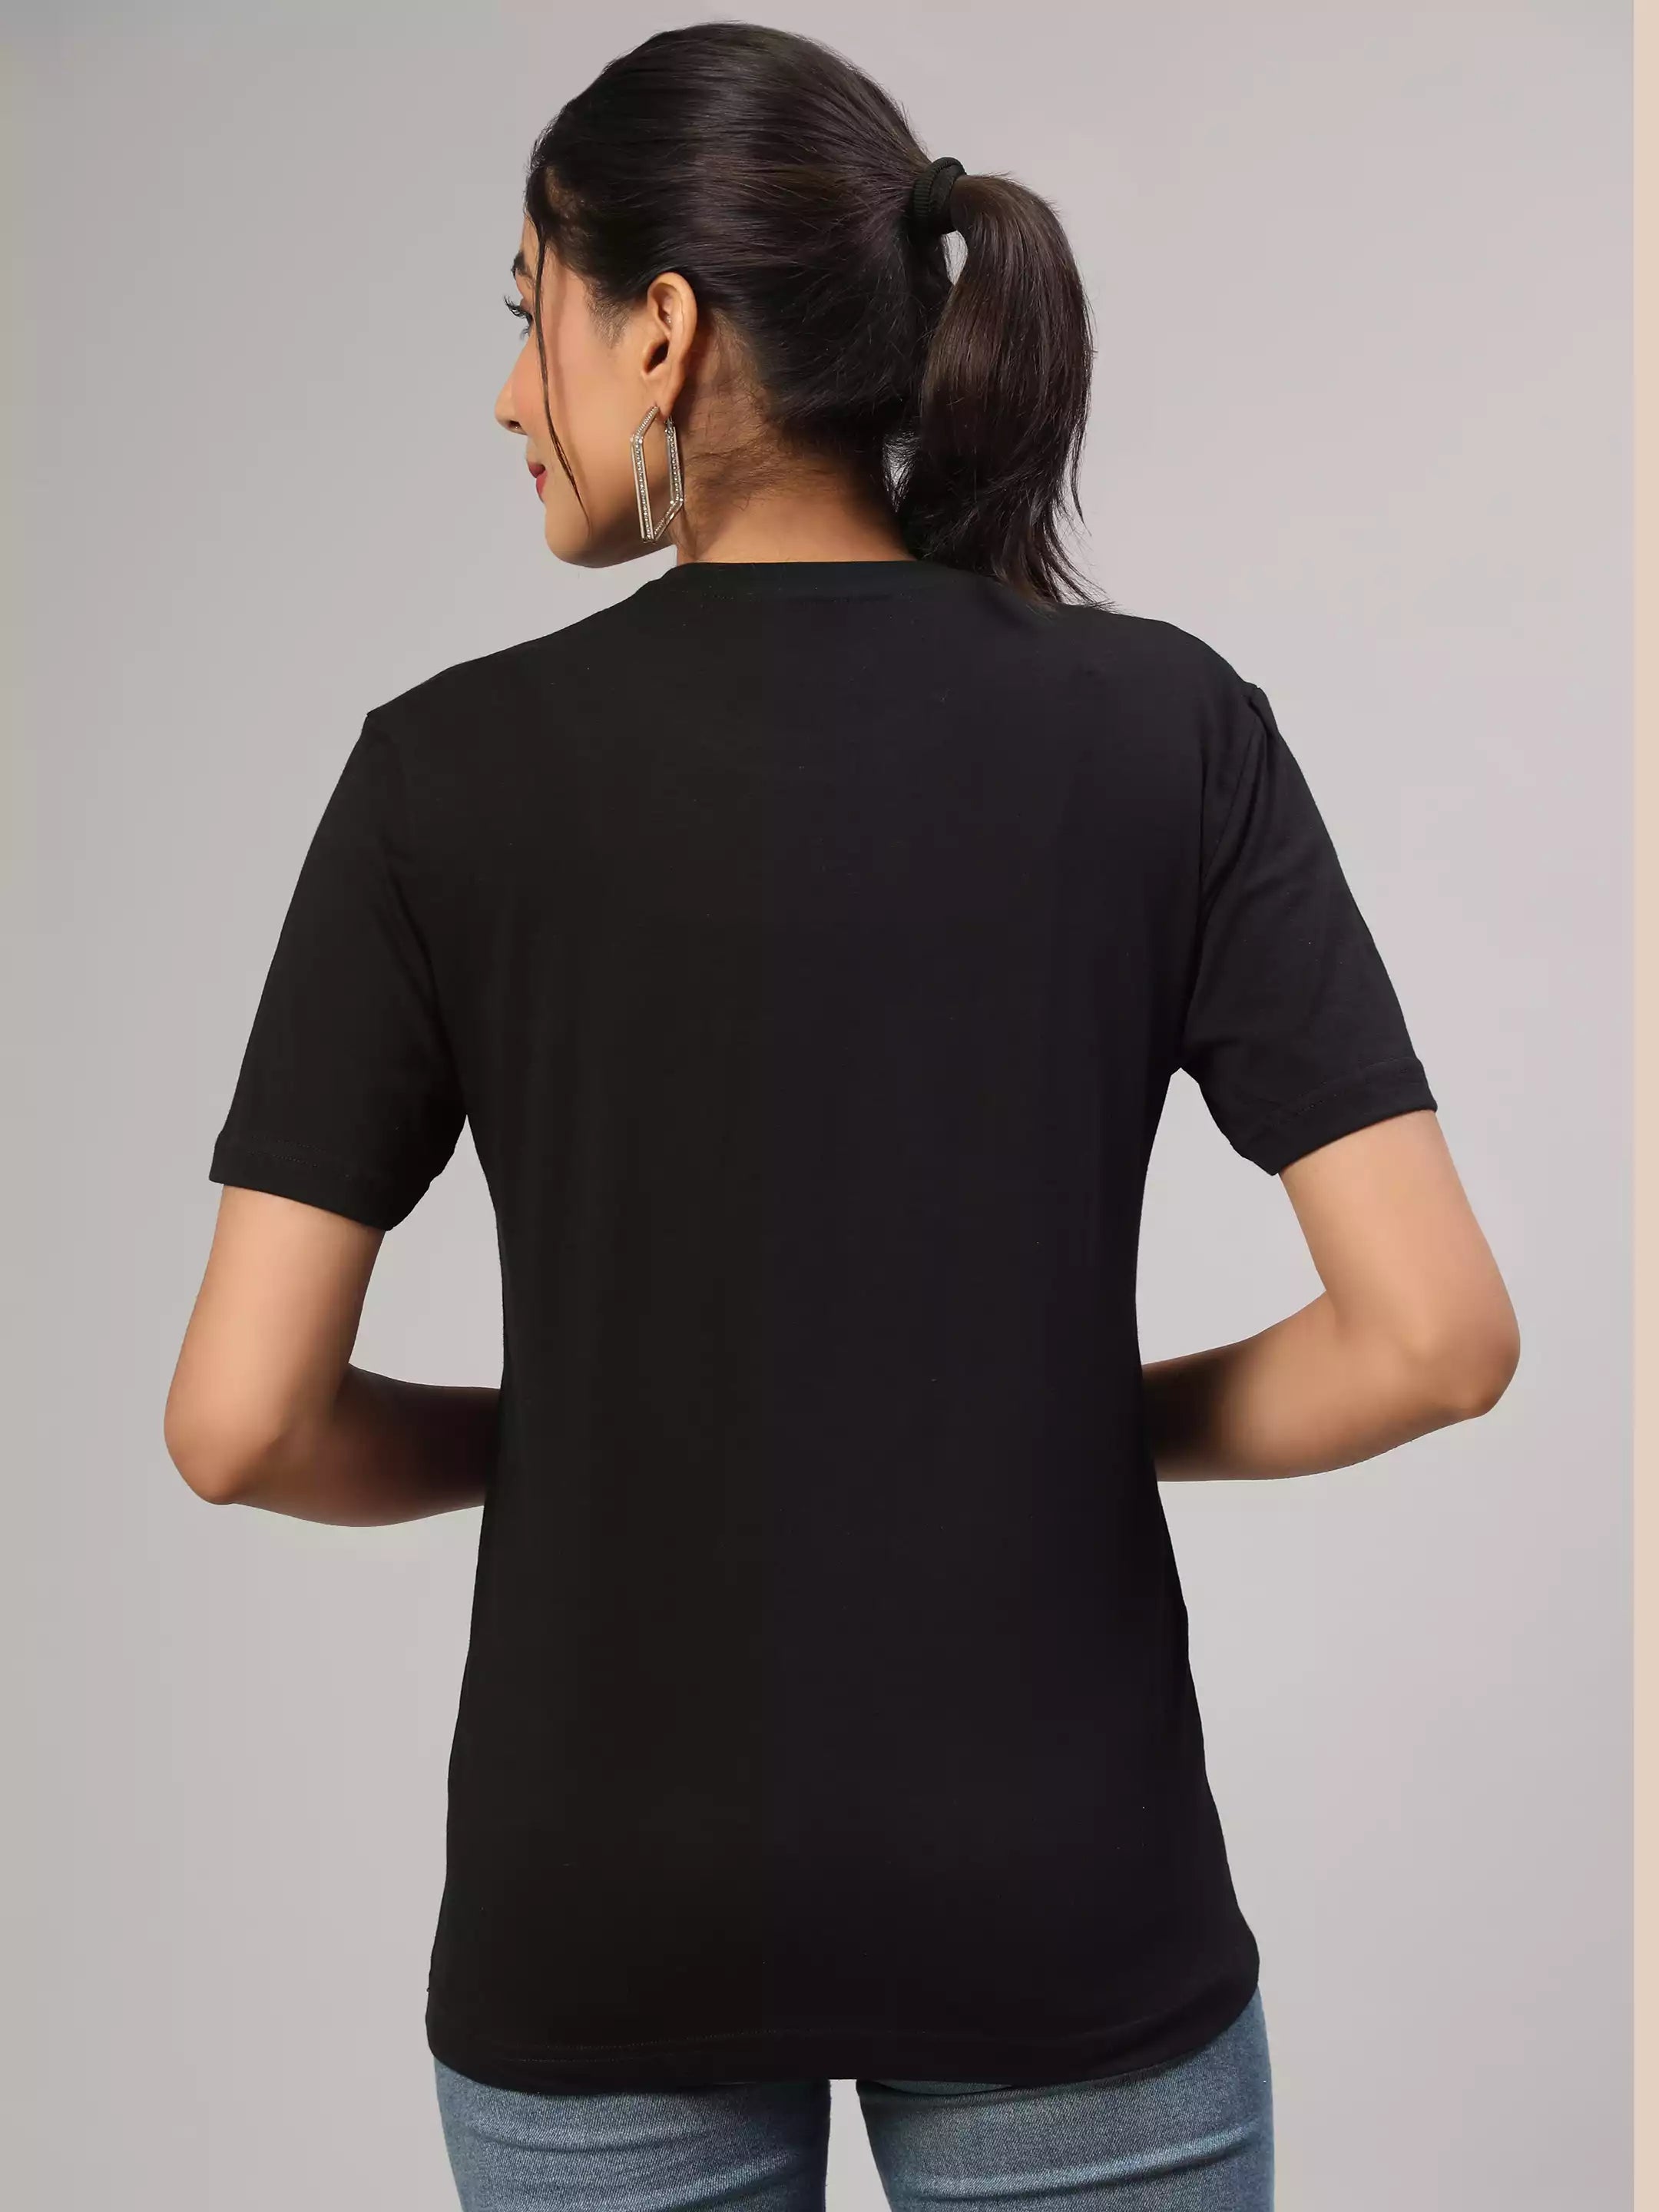 Mag kai nachu - Sukhiaatma Unisex Marathi Graphic Printed Black T-shirt